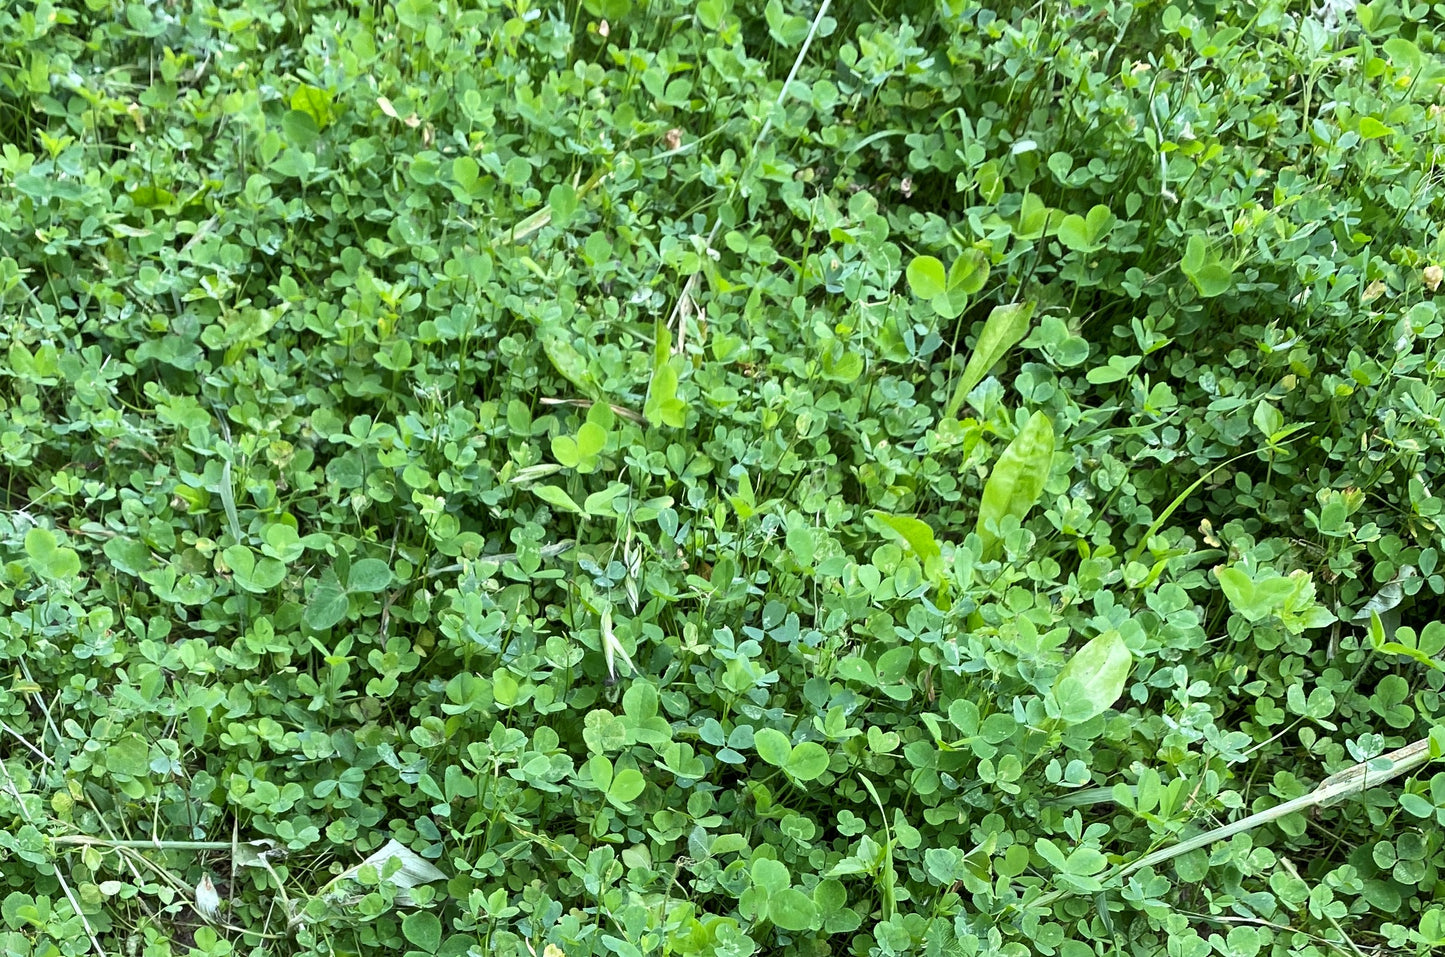 Clovers, Alfalfa, & Chicory - 1/2 Acre